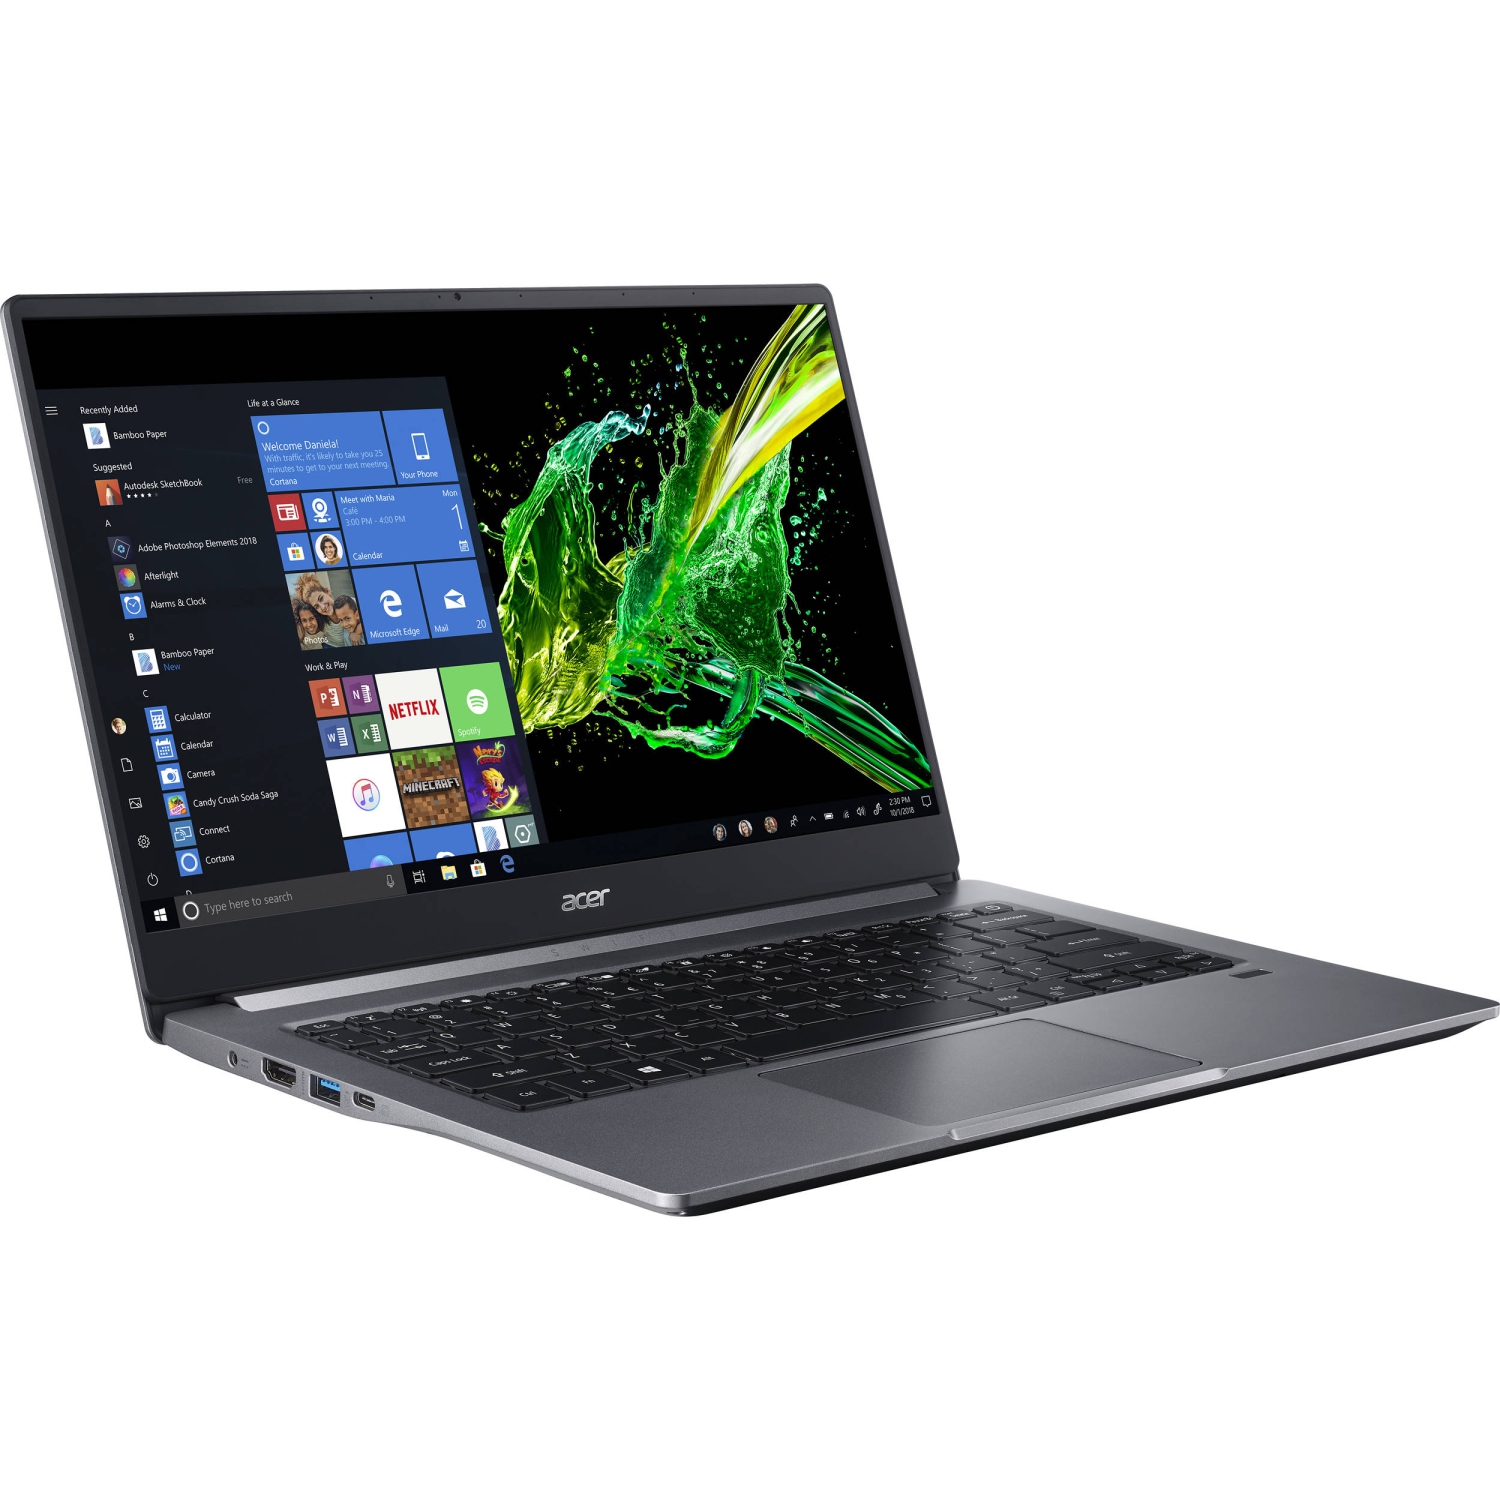 Refurbished (Excellent) - Acer 14" Swift 3 Laptop (Intel Core i7-1065G7/8Gb RAM/512Gb SSD/Win10) - Manufacturer ReCertified w/ 1 Year Warranty